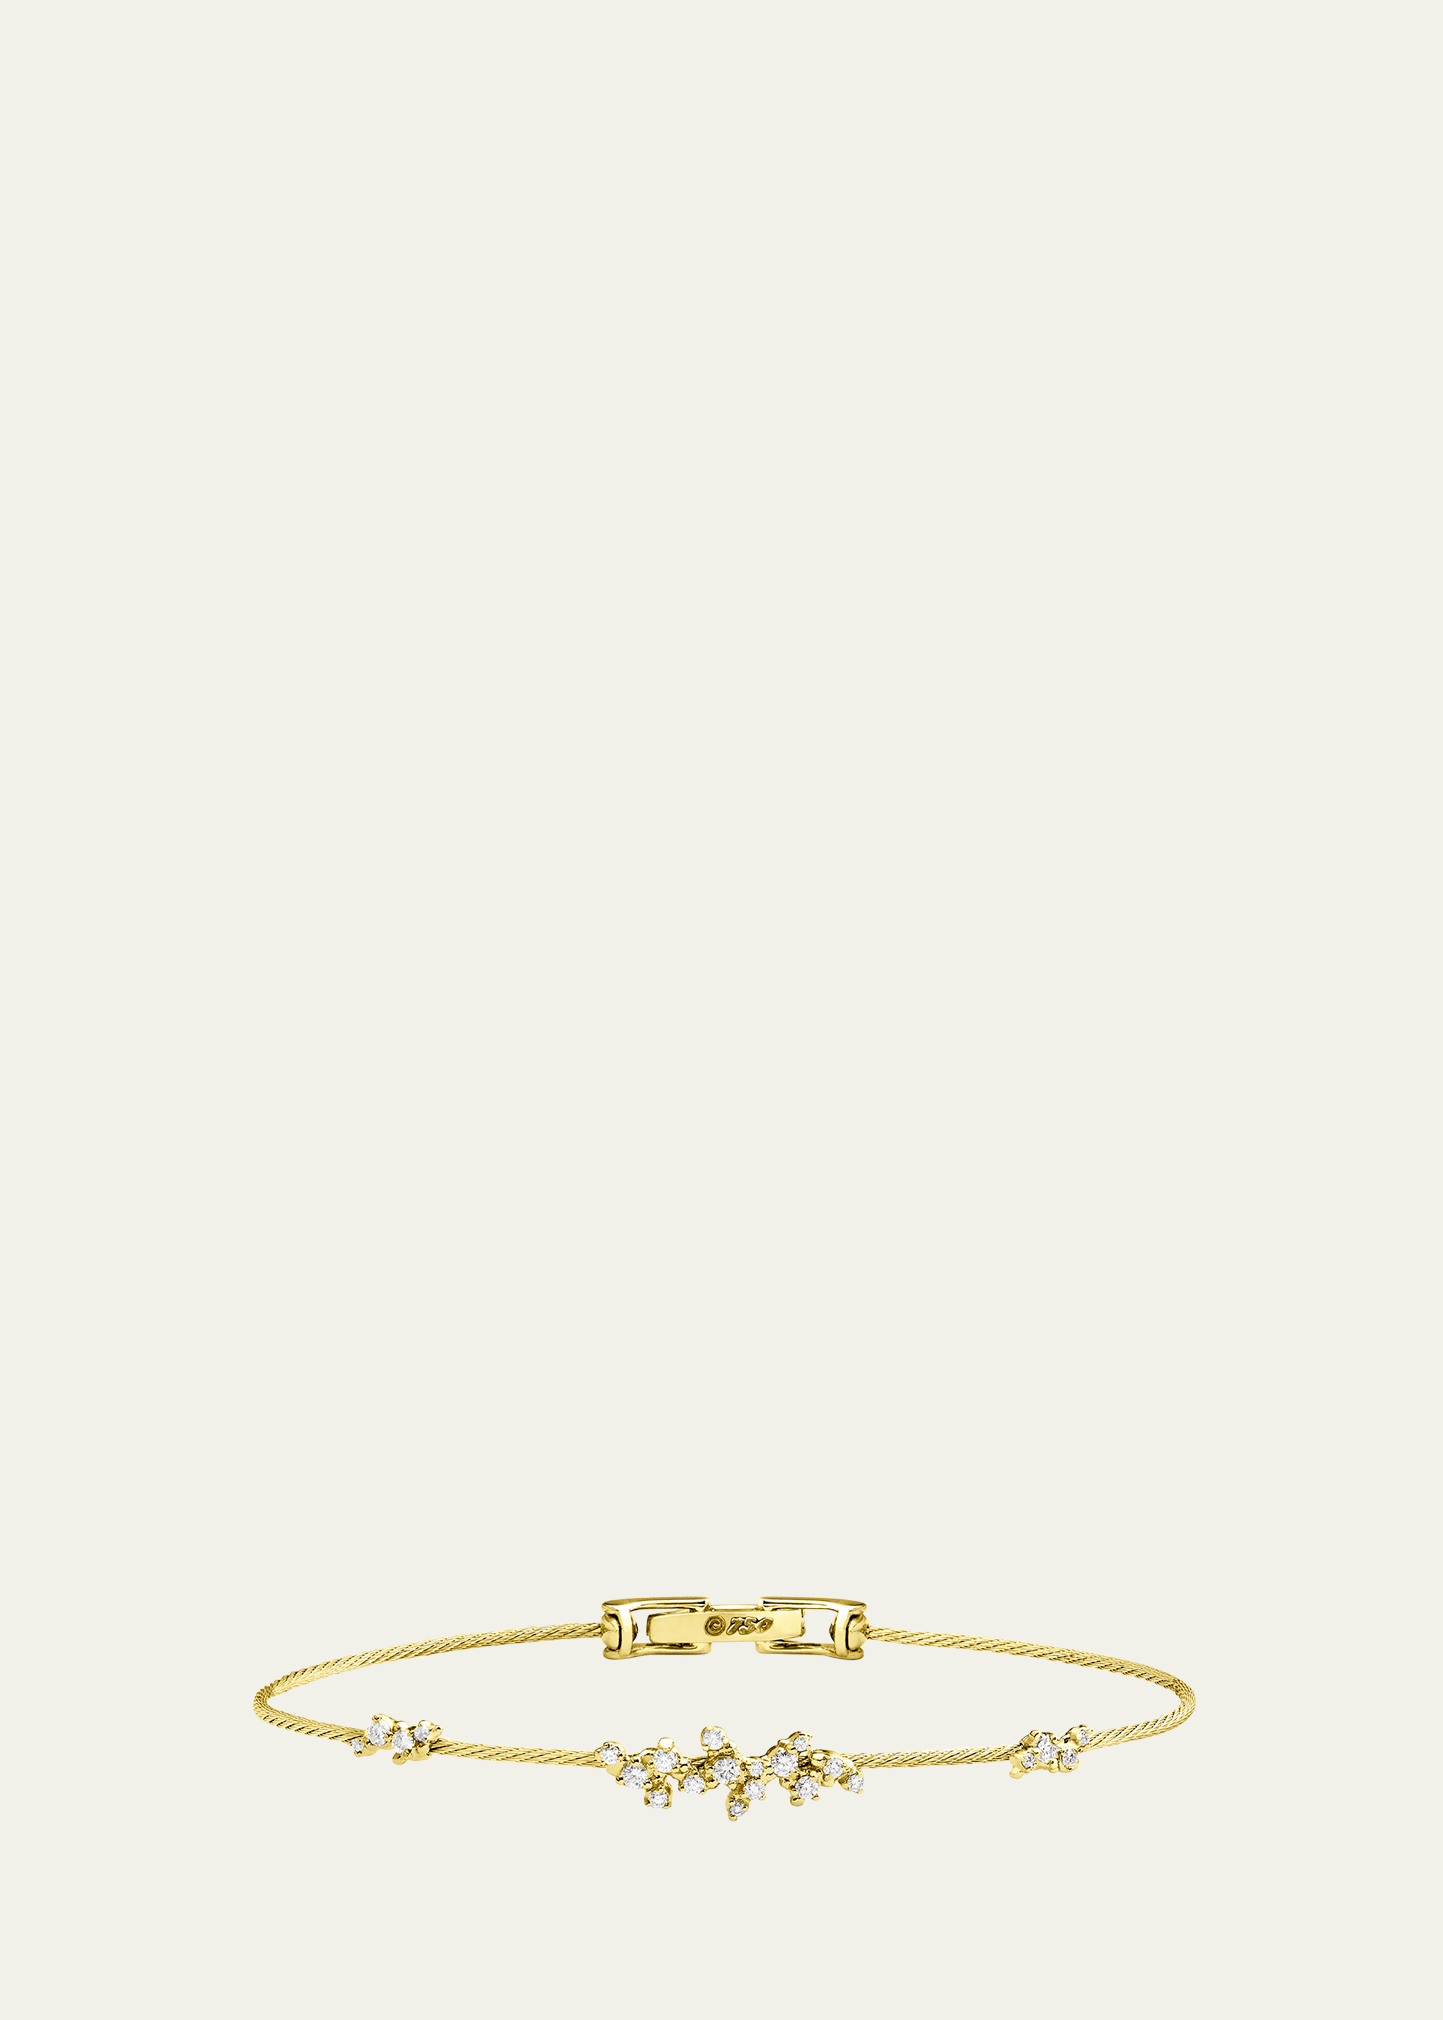 Confetti Unity Wire Bracelet in 18k Gold with Diamonds, 7"